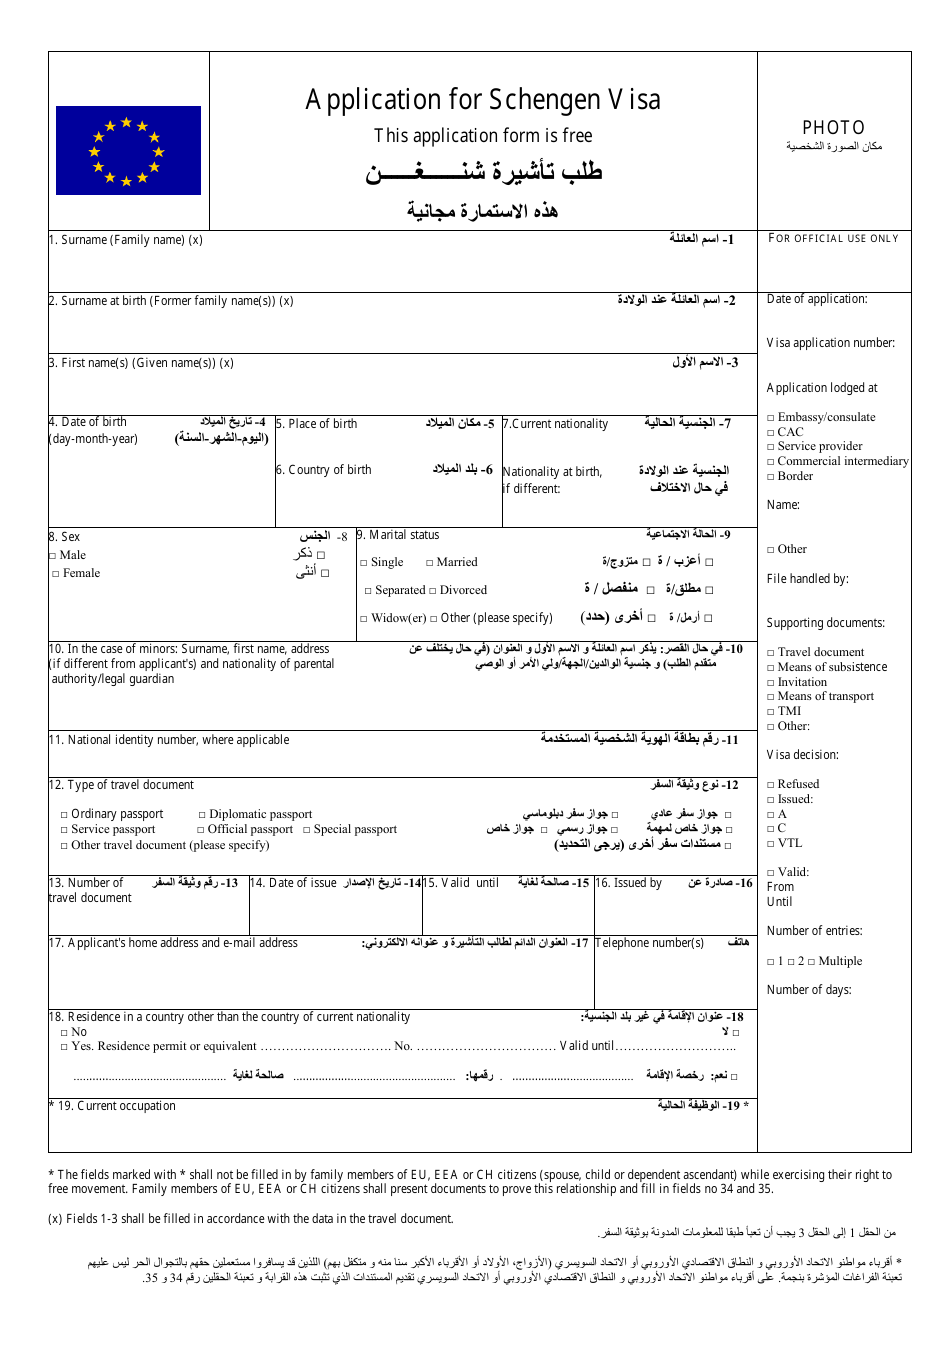 schengen-visa-application-form-fill-out-sign-online-and-download-pdf